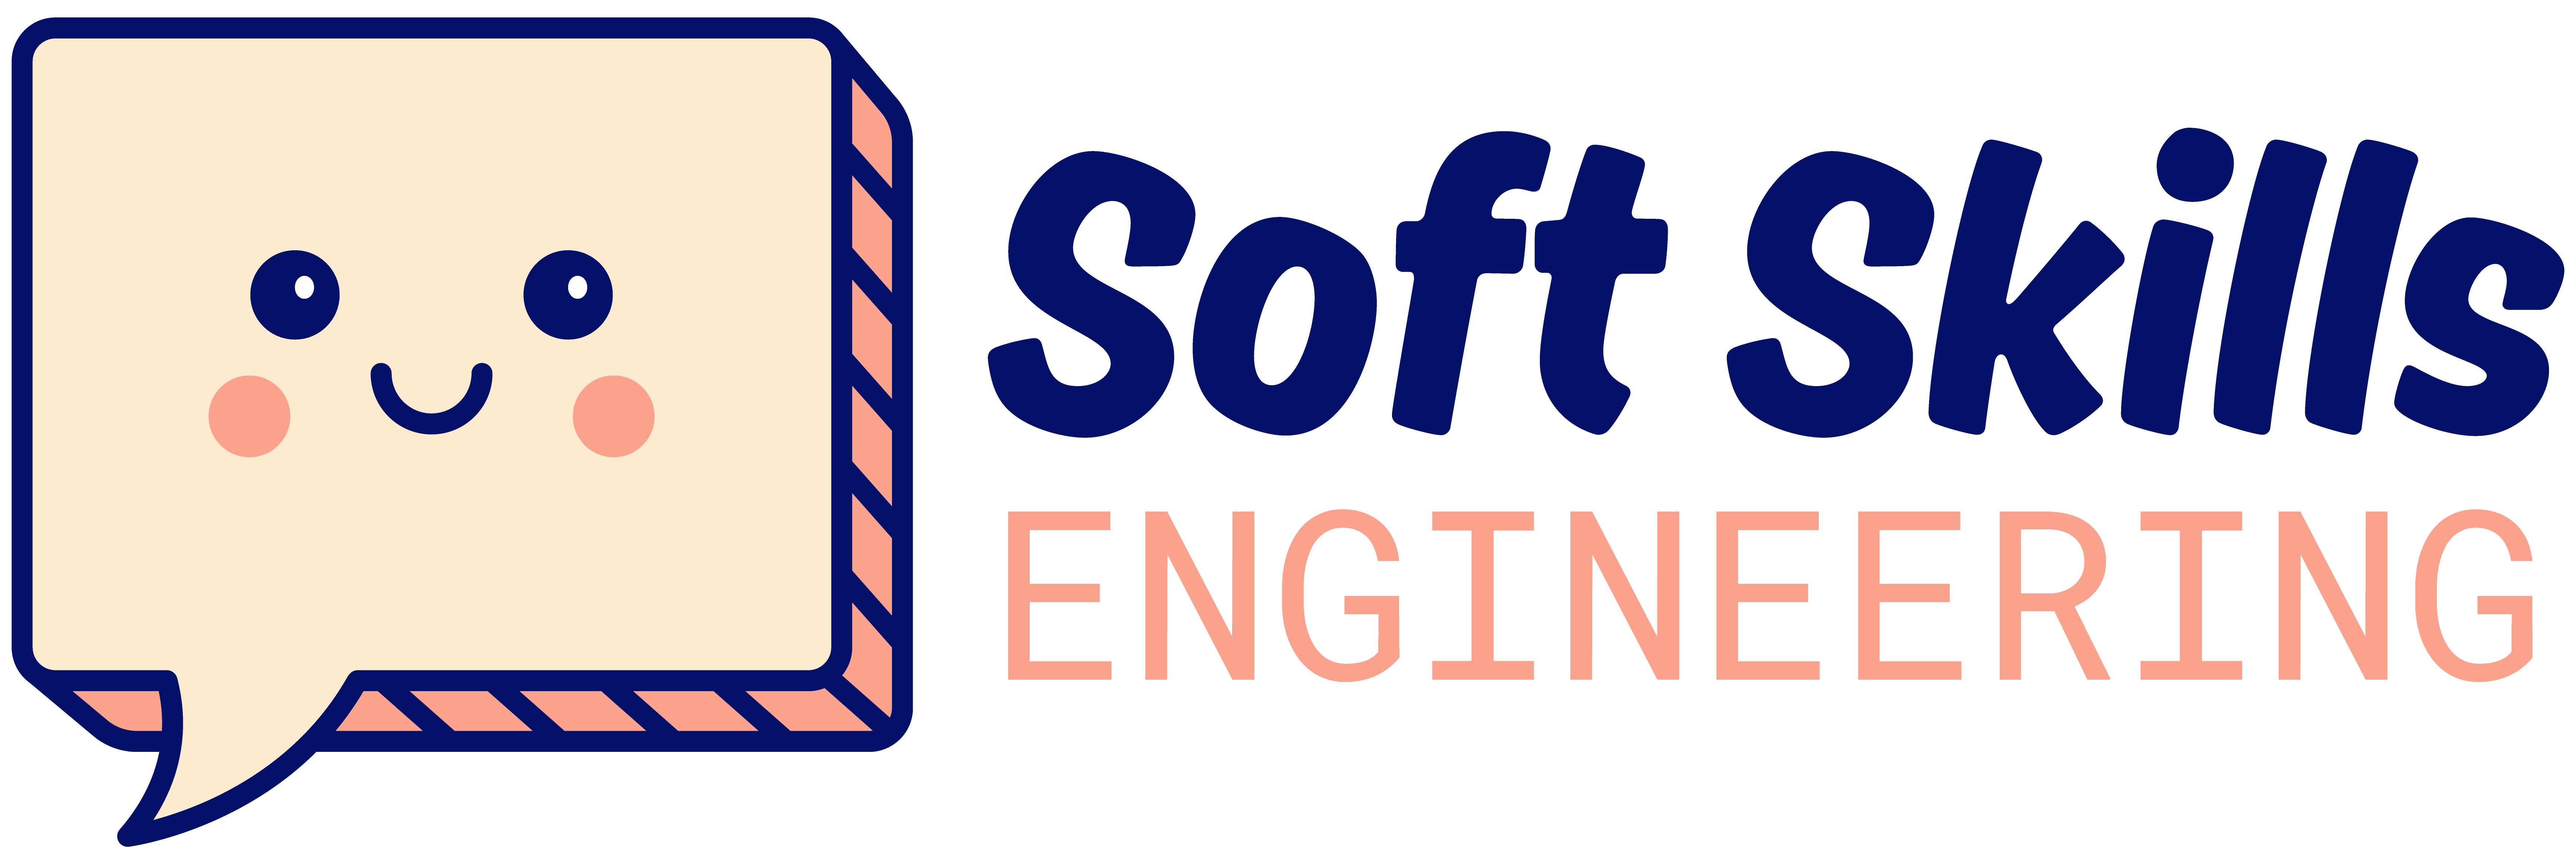 Logo of Soft Skill Engineering Podcast